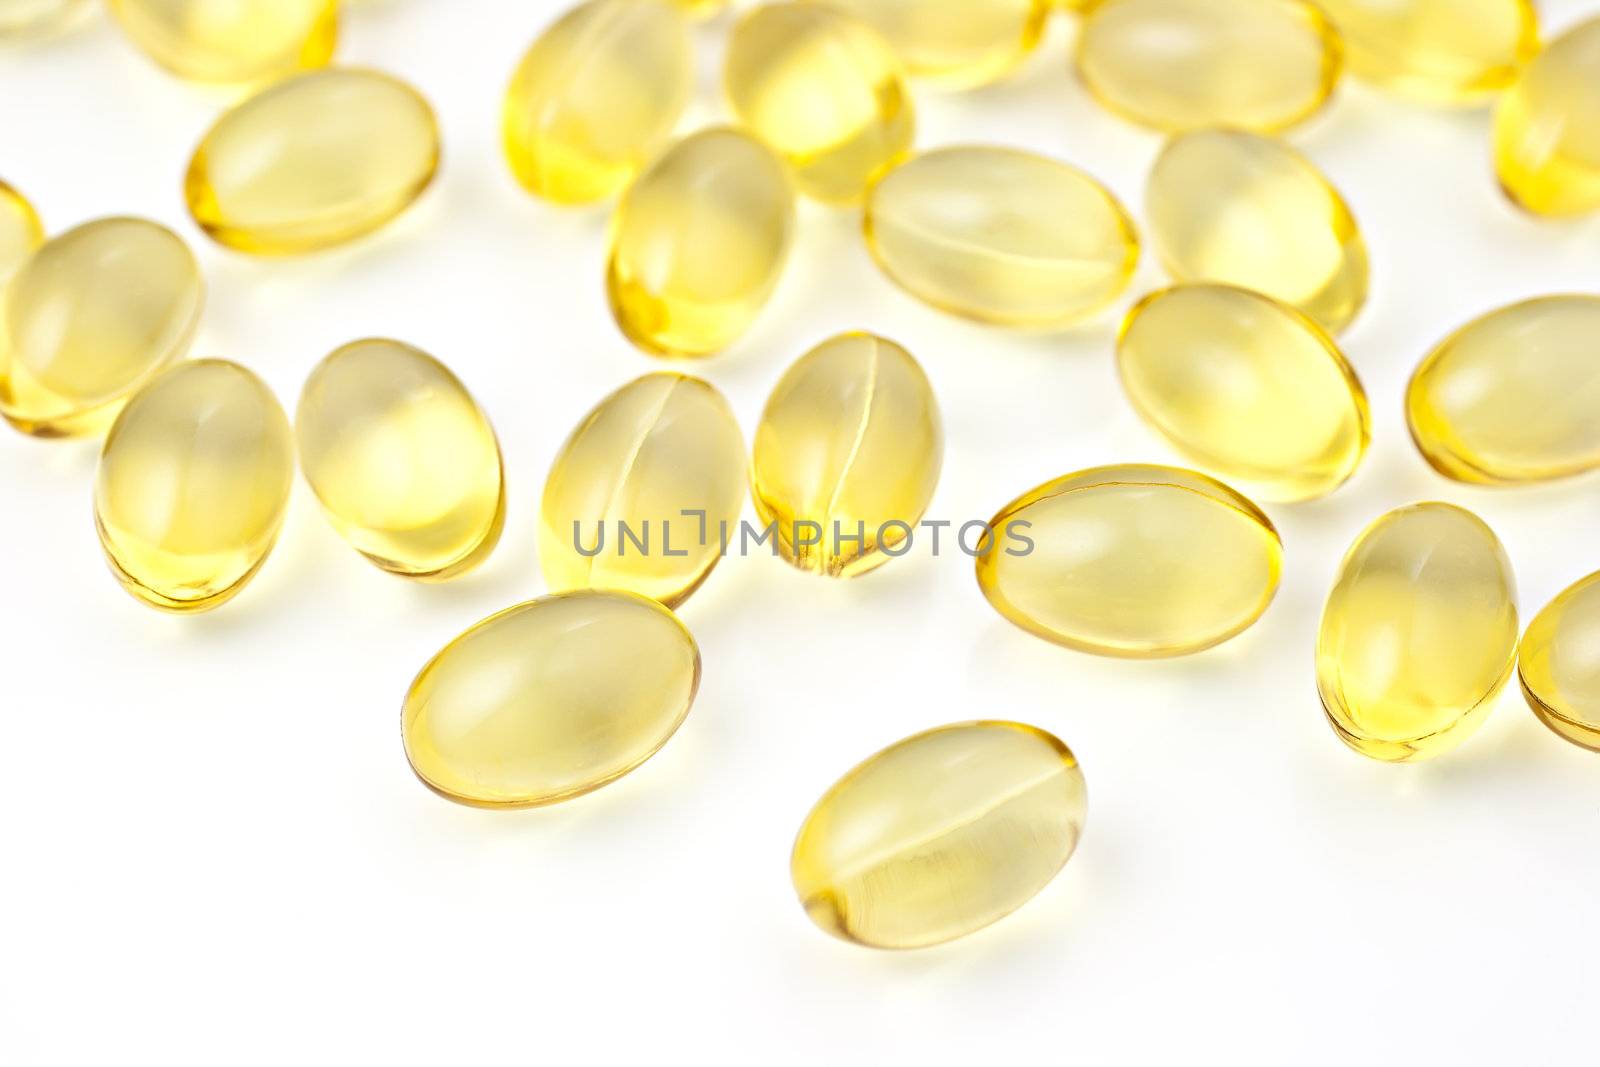 Gel vitamin supplement capsules. by gitusik